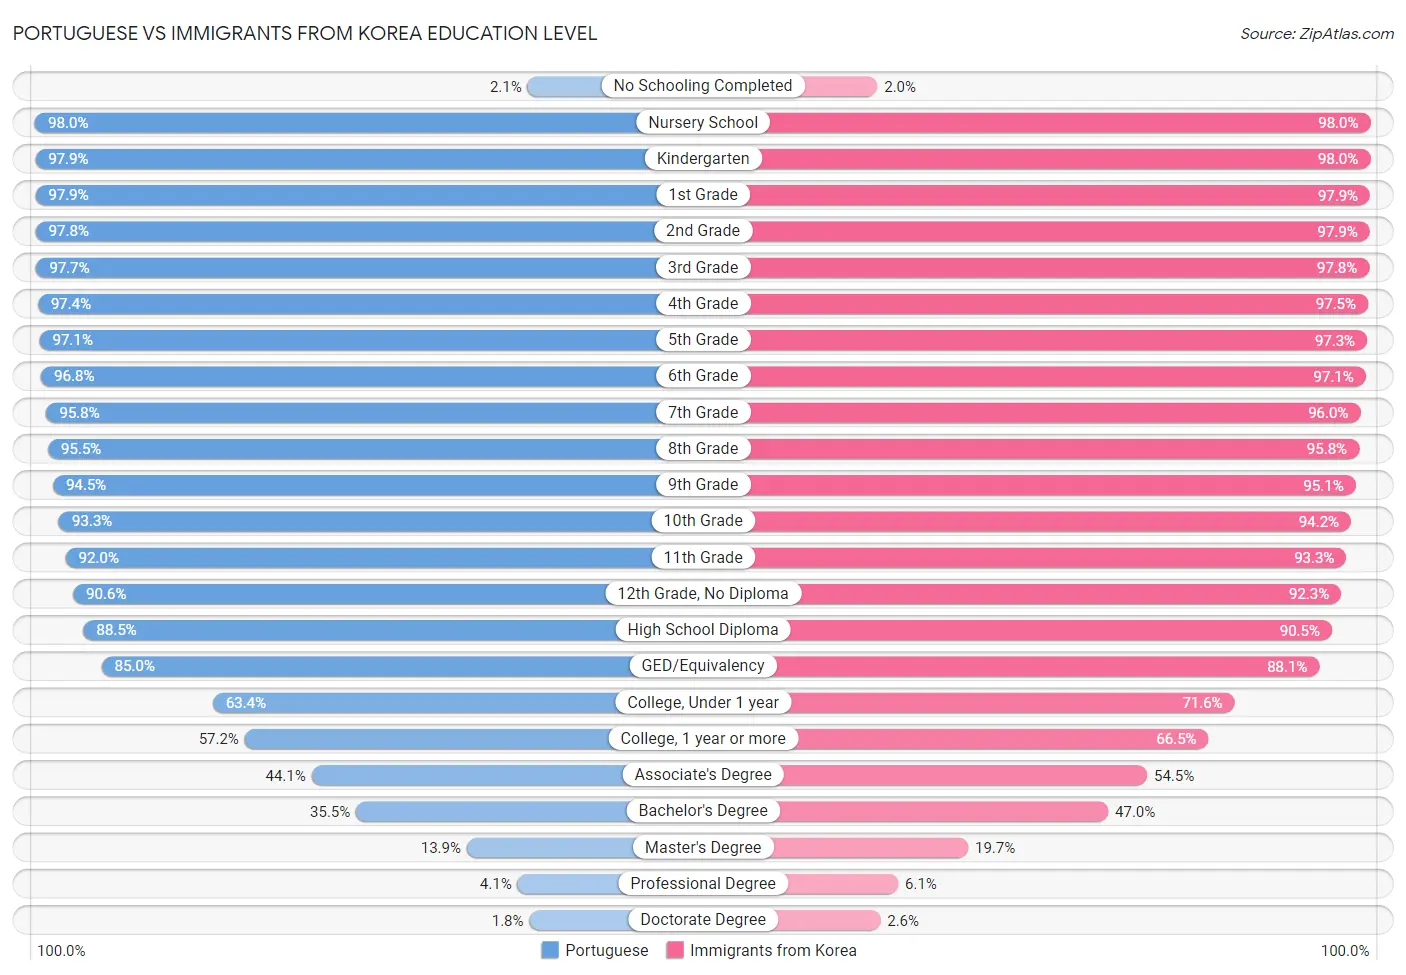 Portuguese vs Immigrants from Korea Education Level